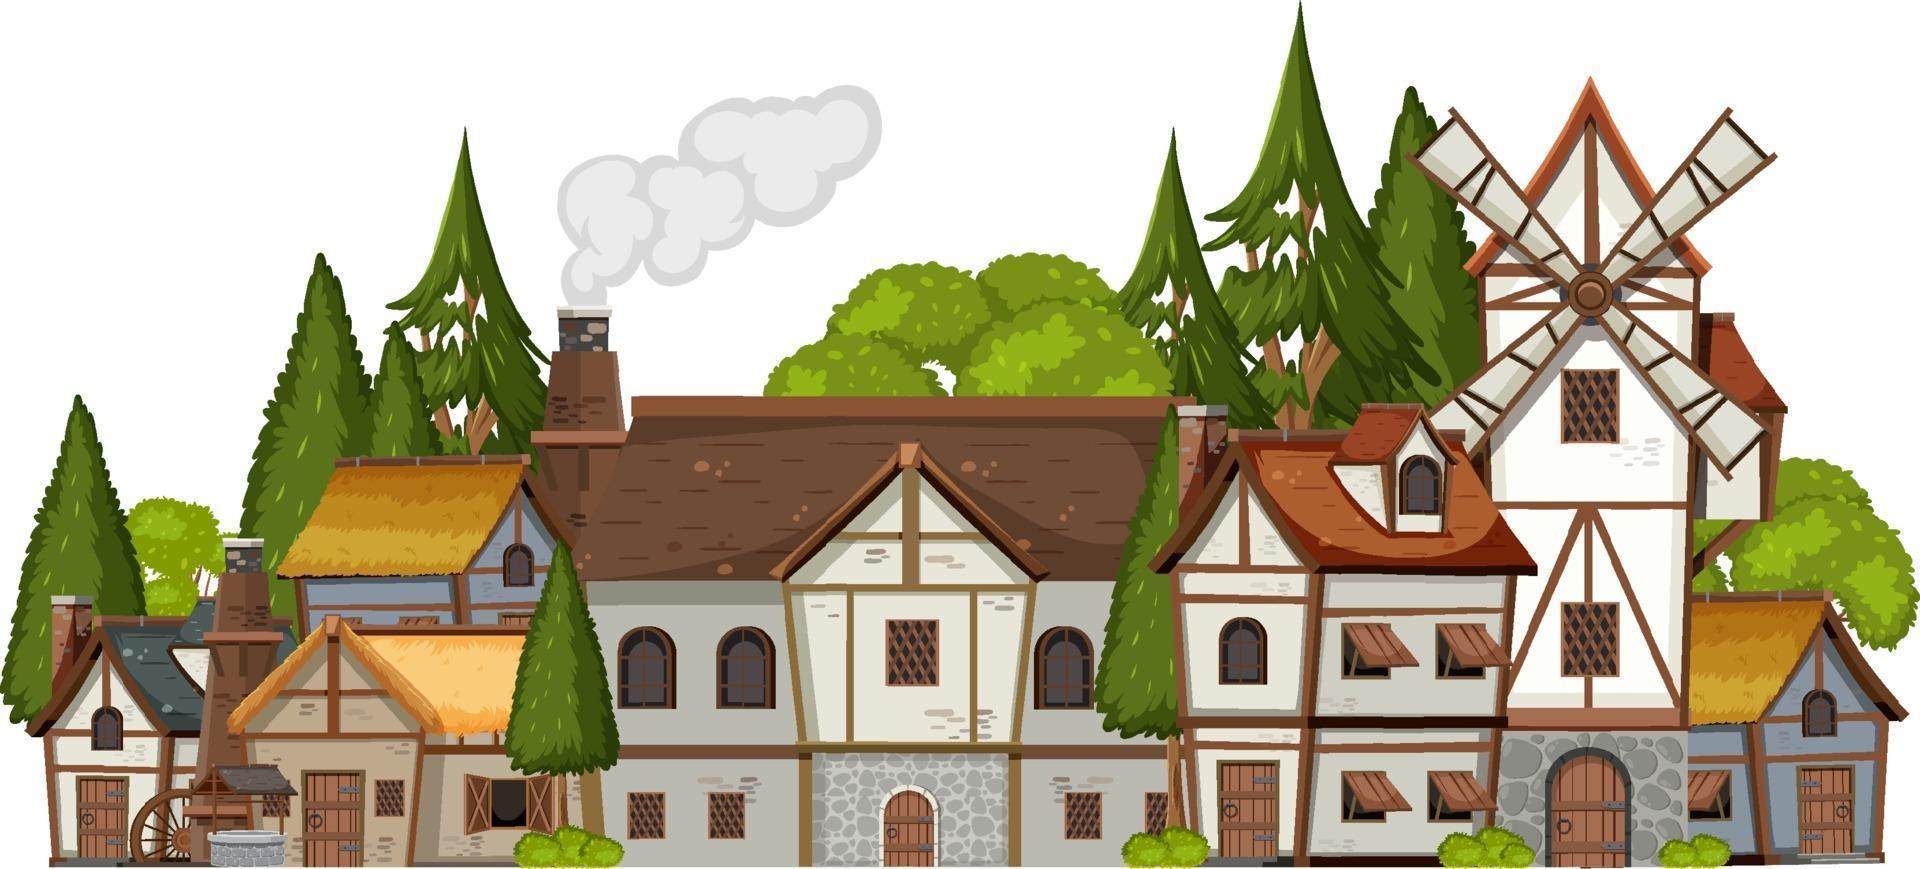 Medieval village scene on white background vector